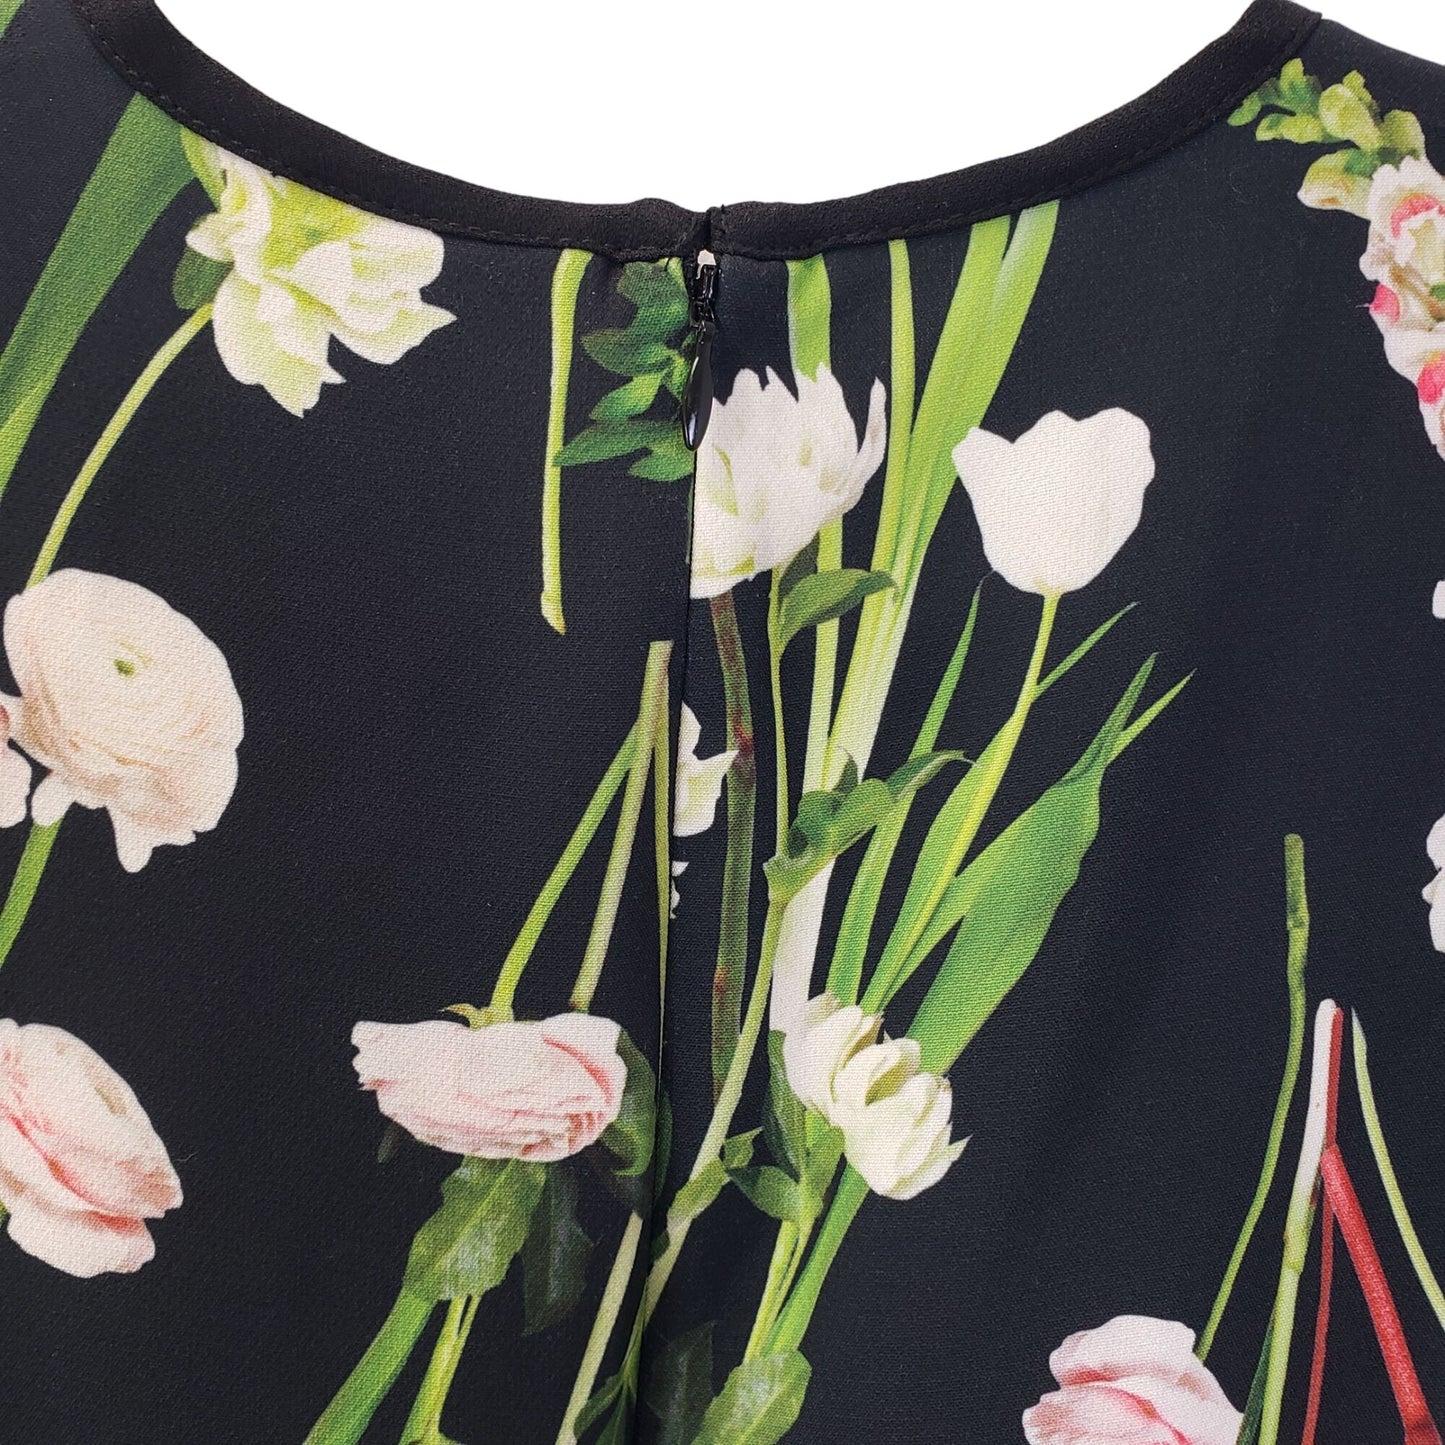 Victoria Beckham for Target Floral Sleeveless Dress Size Medium